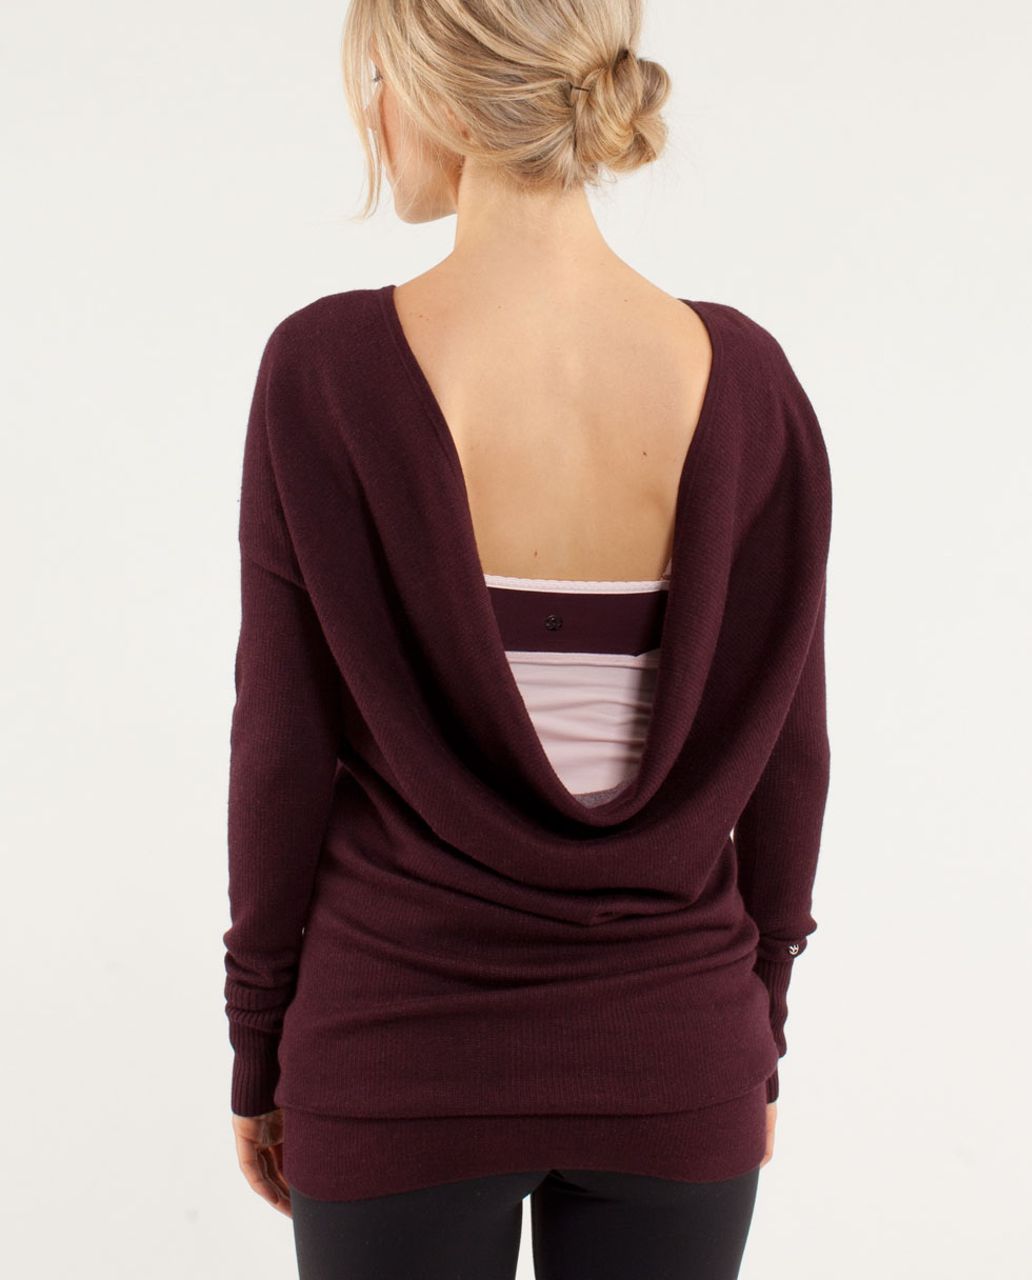 lululemon serenity sweater dress